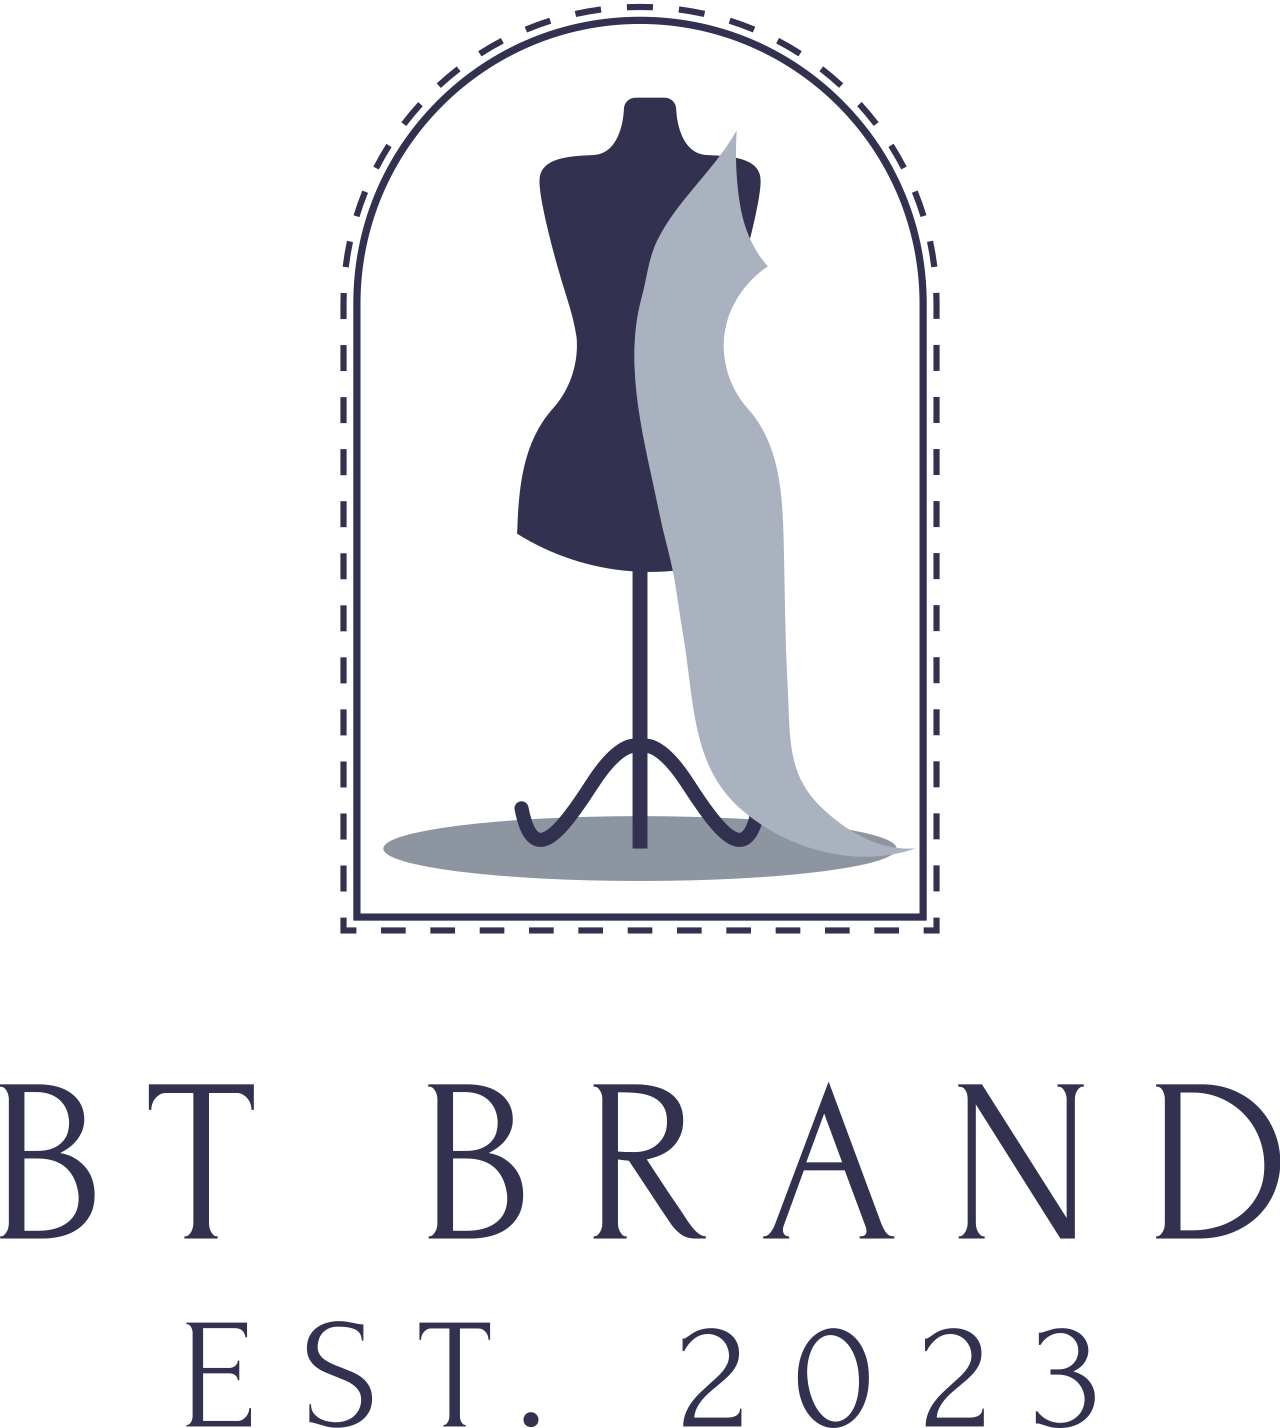 BT brand's logo